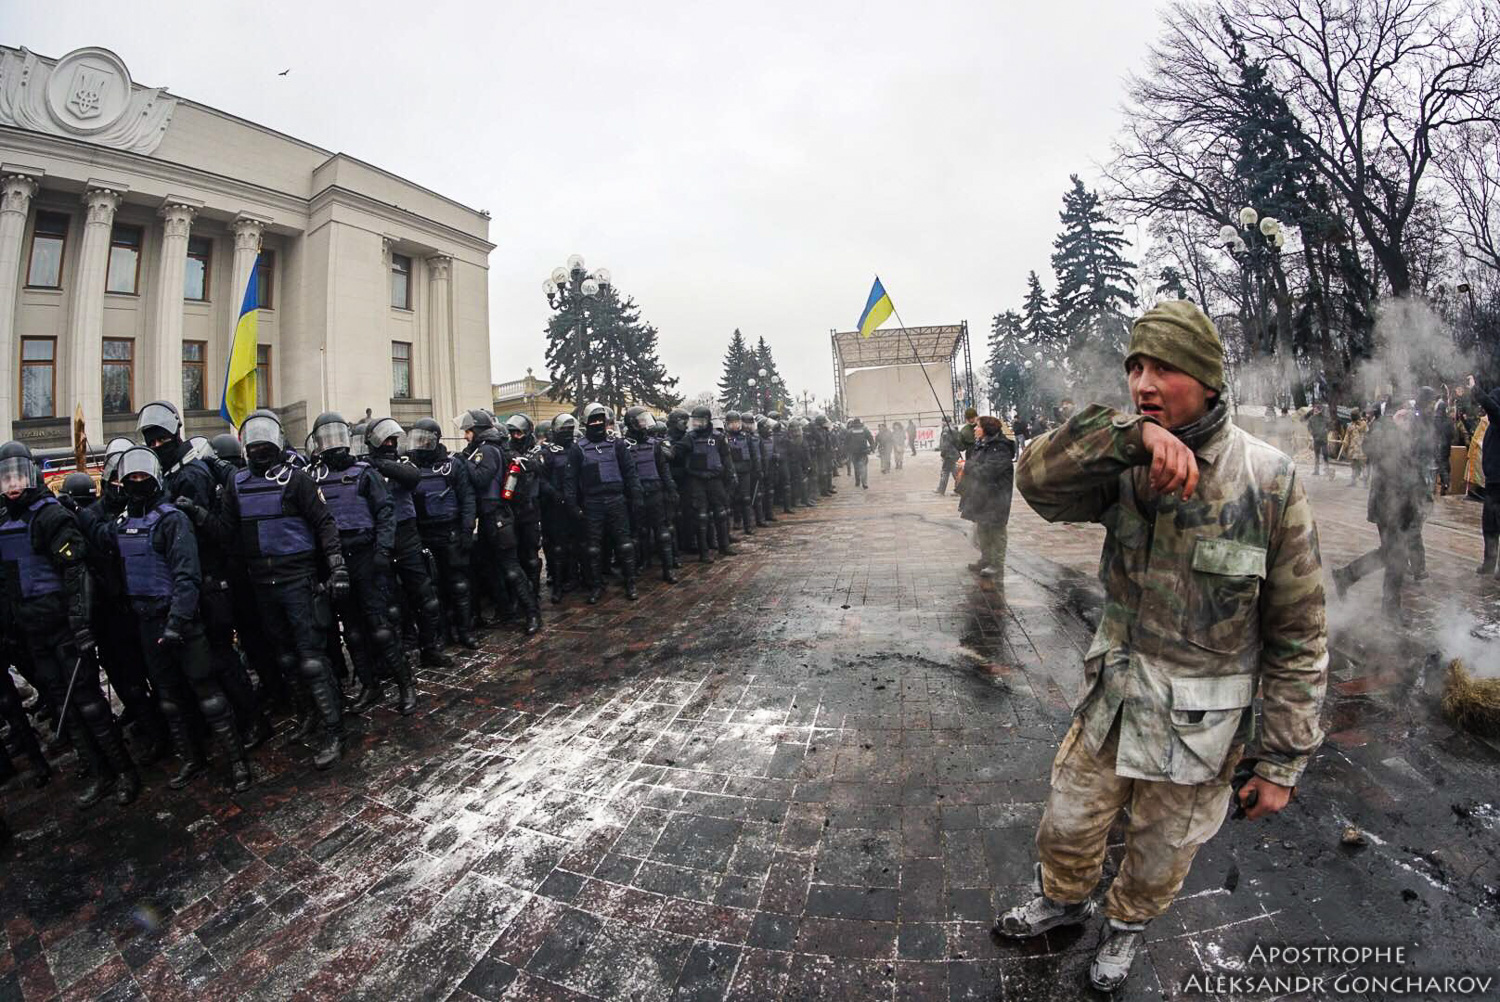 Ukraine - Ukraine News in brief. Tuesday 16 January. [Ukrainian sources] 4e141d7b47159f66fdba6db27beab3cd